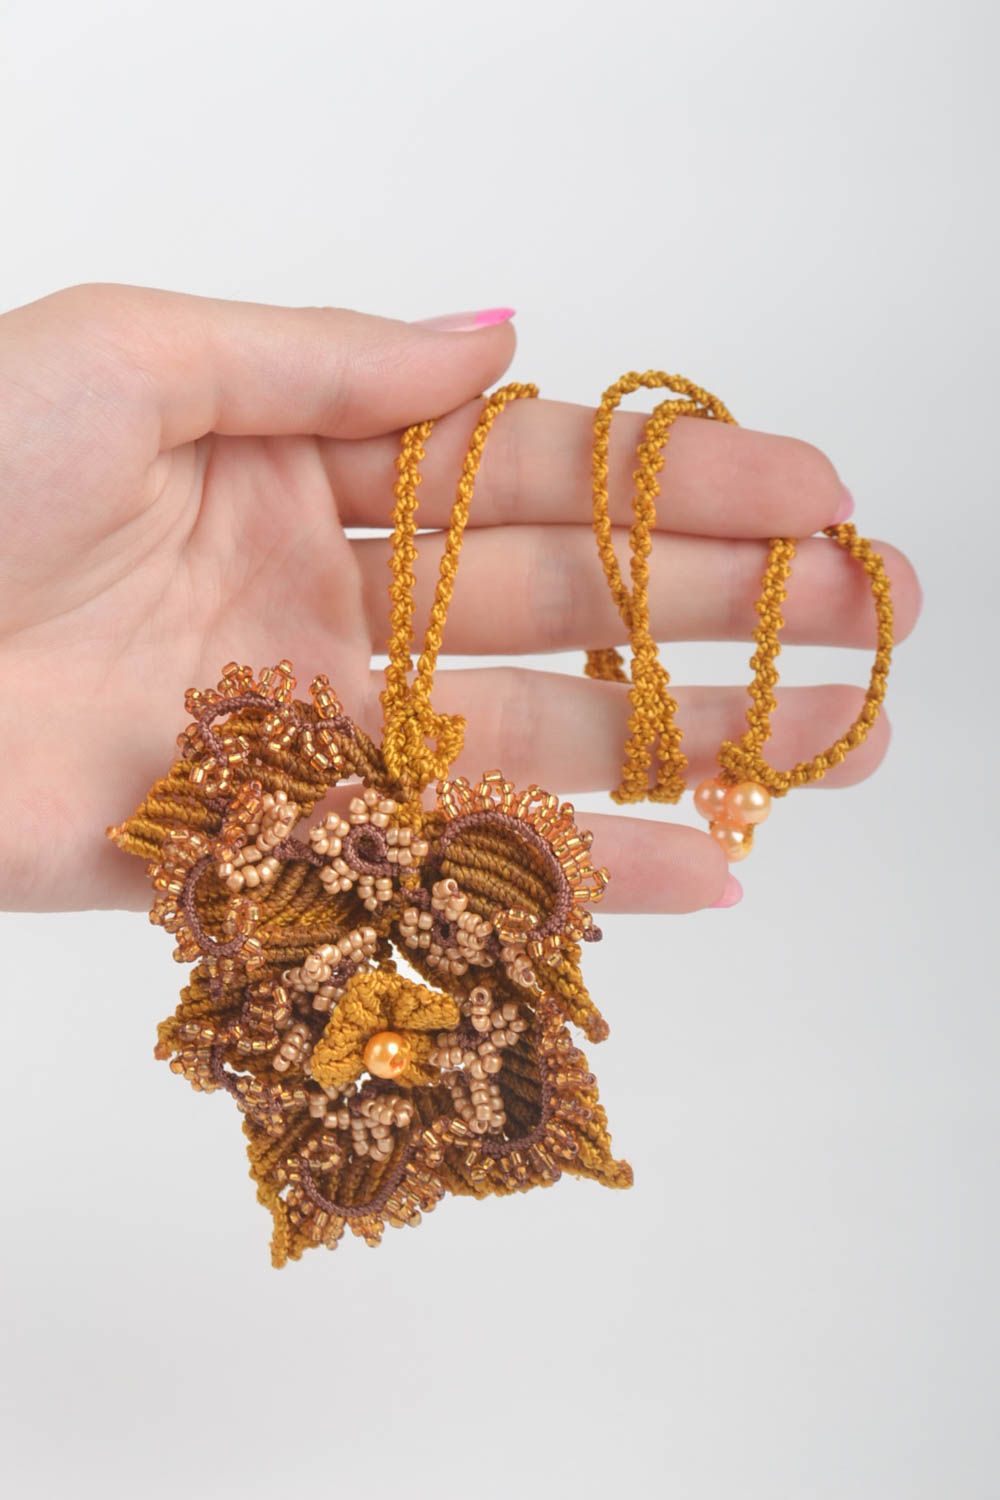 Handmade pendant designer pendant beaded pendant beads jewelry gift ideas photo 5